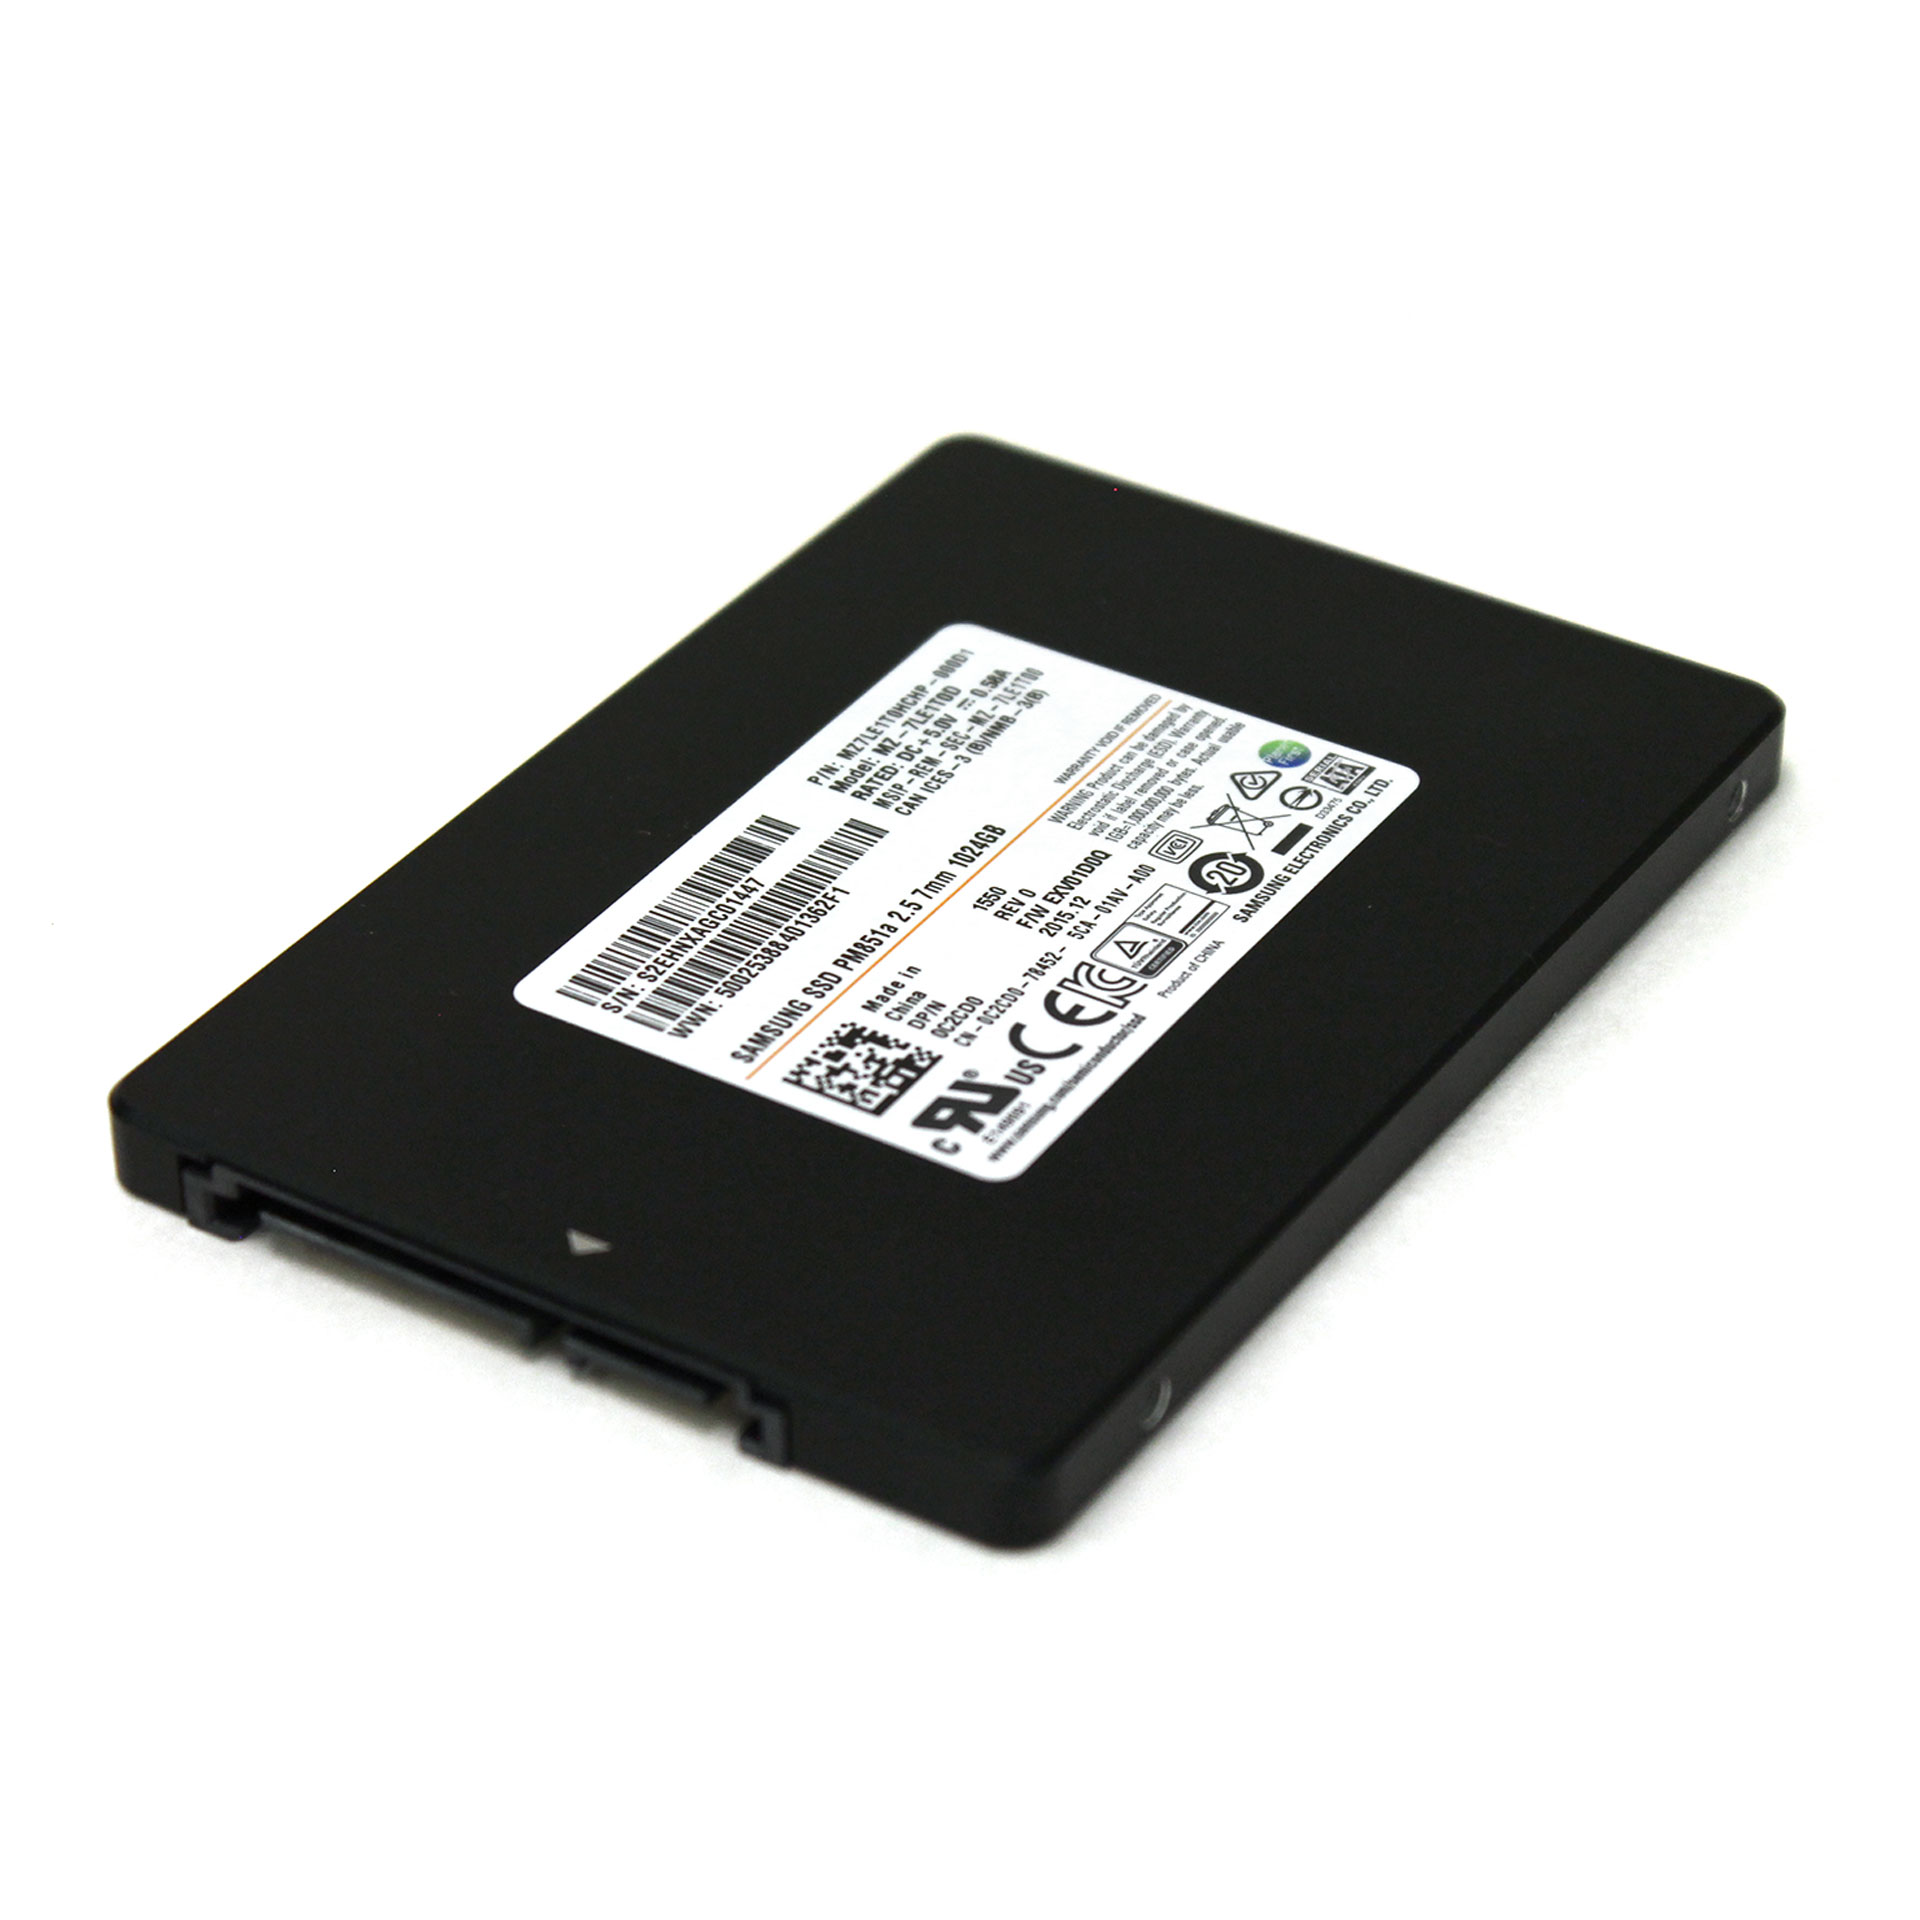 Dell/Samsung 2.5" Sata III 1TB NAND Based MZ7LE1T0HCHP C2CD0 SSD